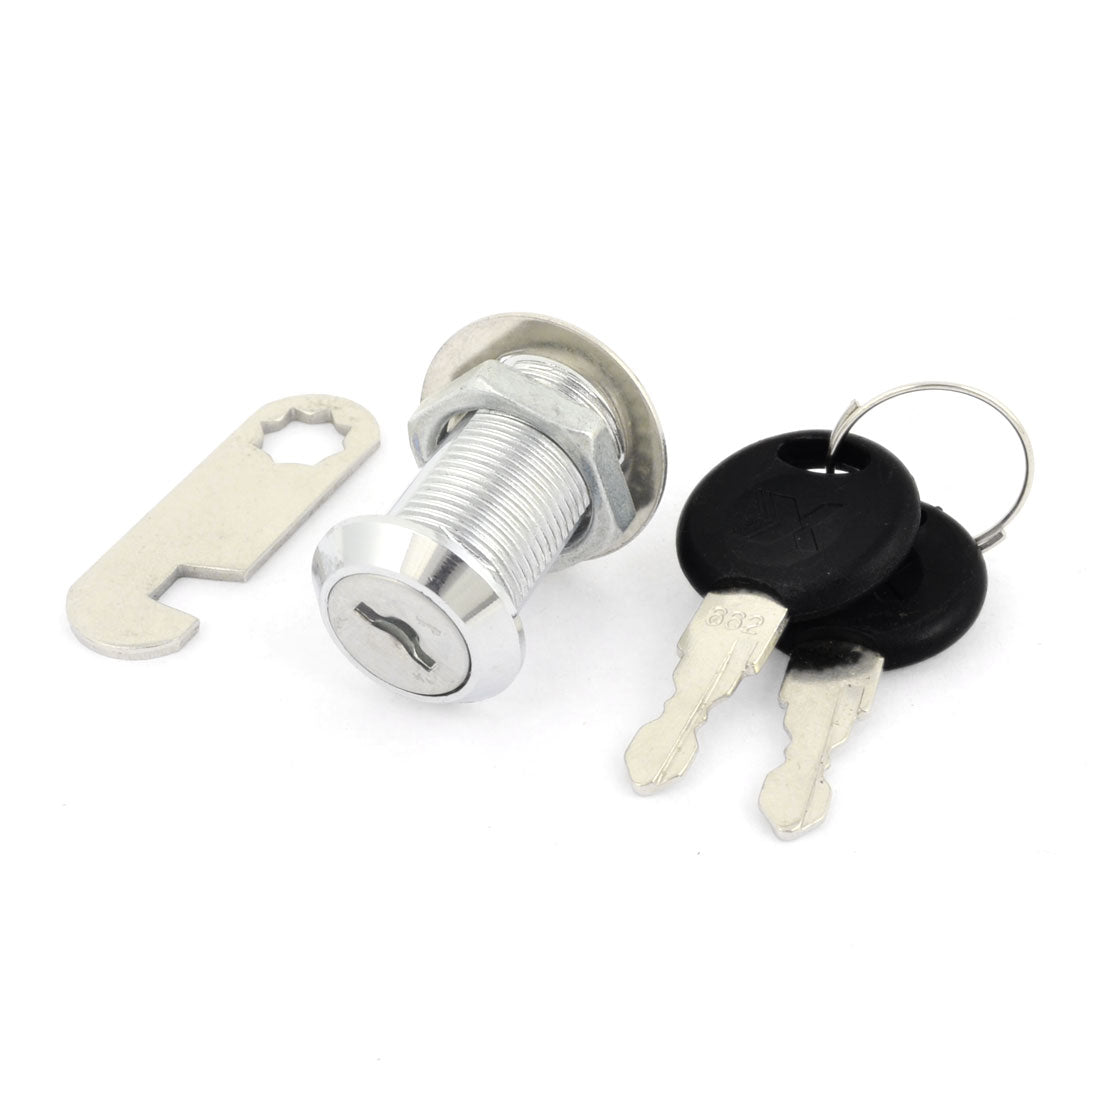 uxcell Uxcell Home Tool Box Cabinet Locking 18mm Dia Thread Cylinder Cam Lock W Keys